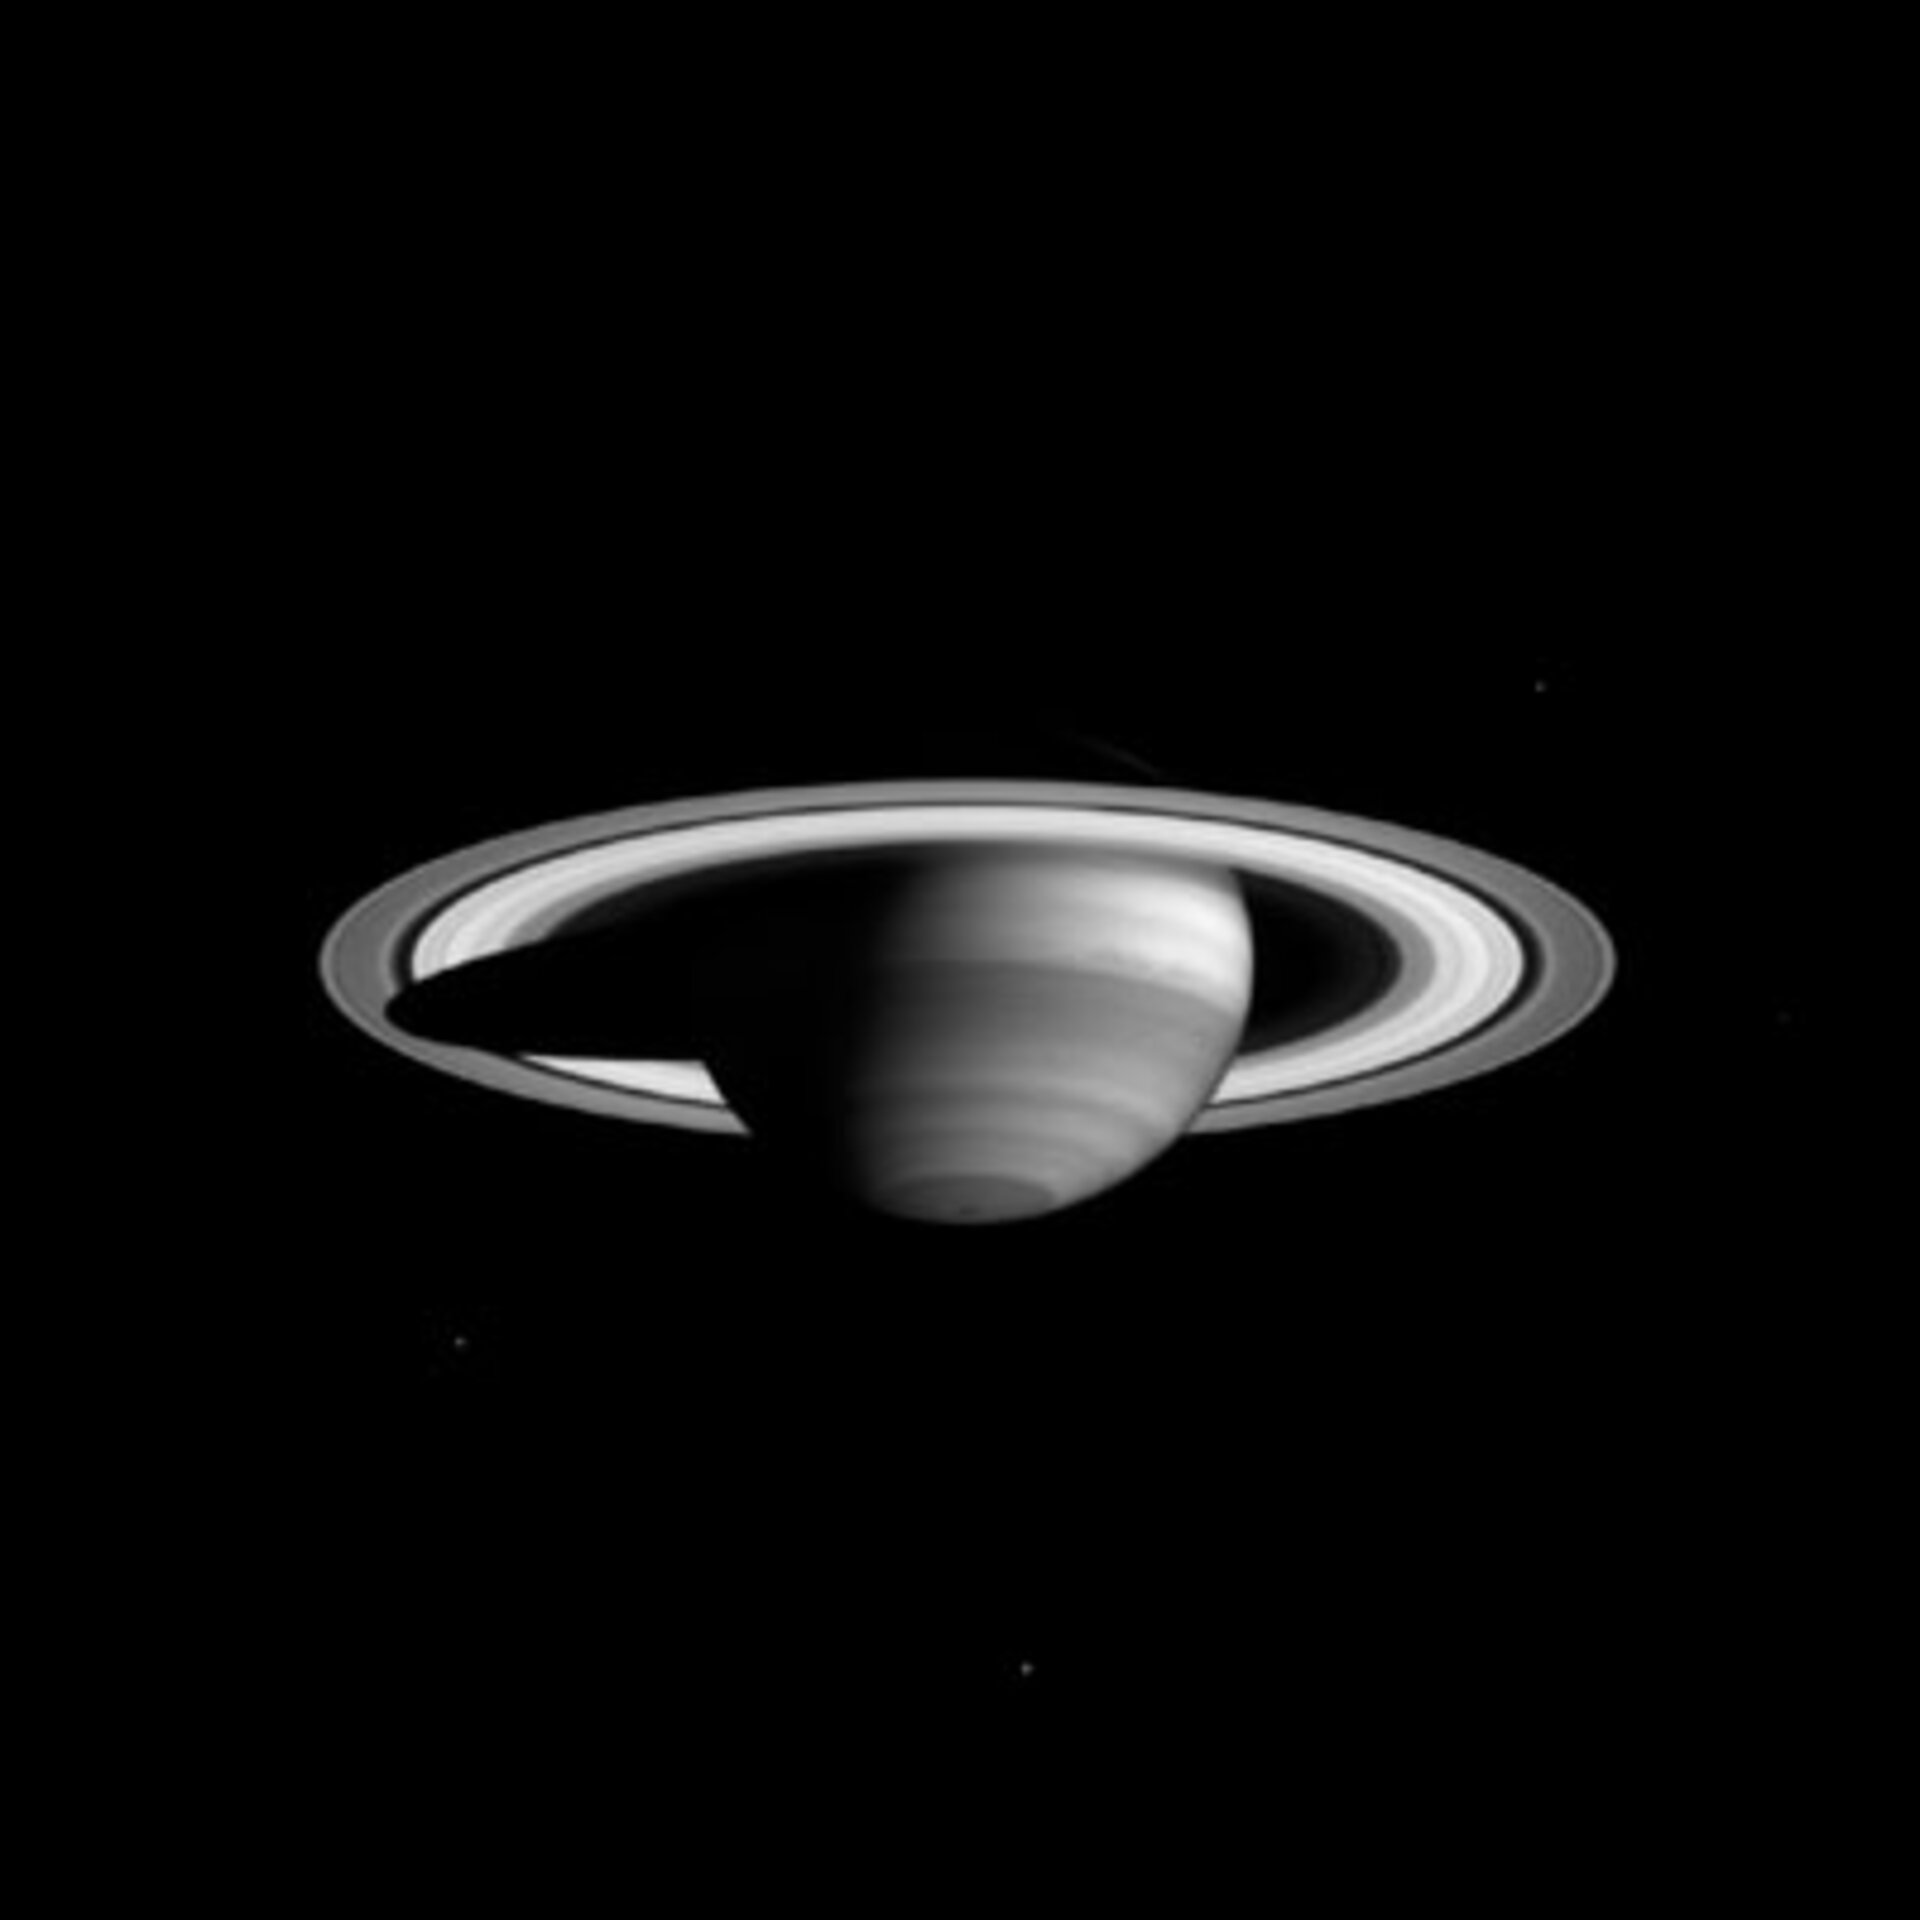 Saturn 'methane' image